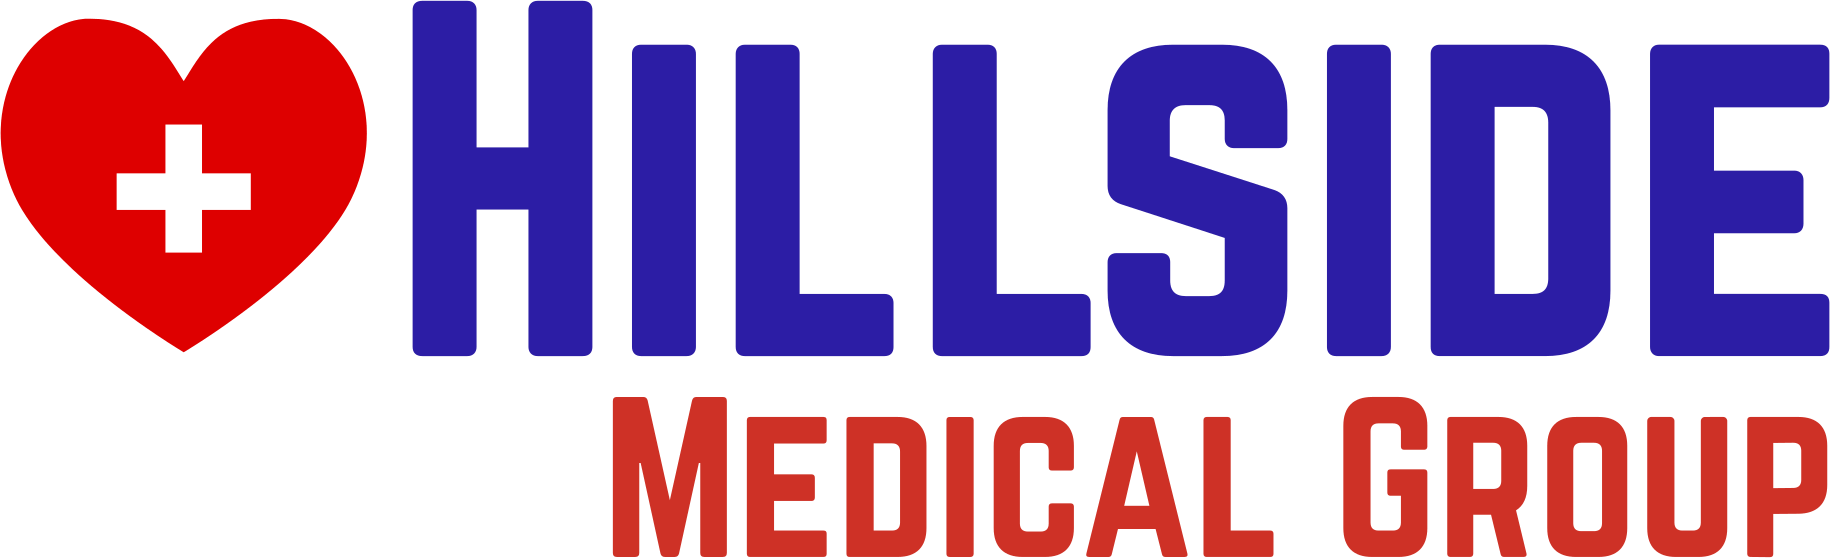 Hillside Medical Group